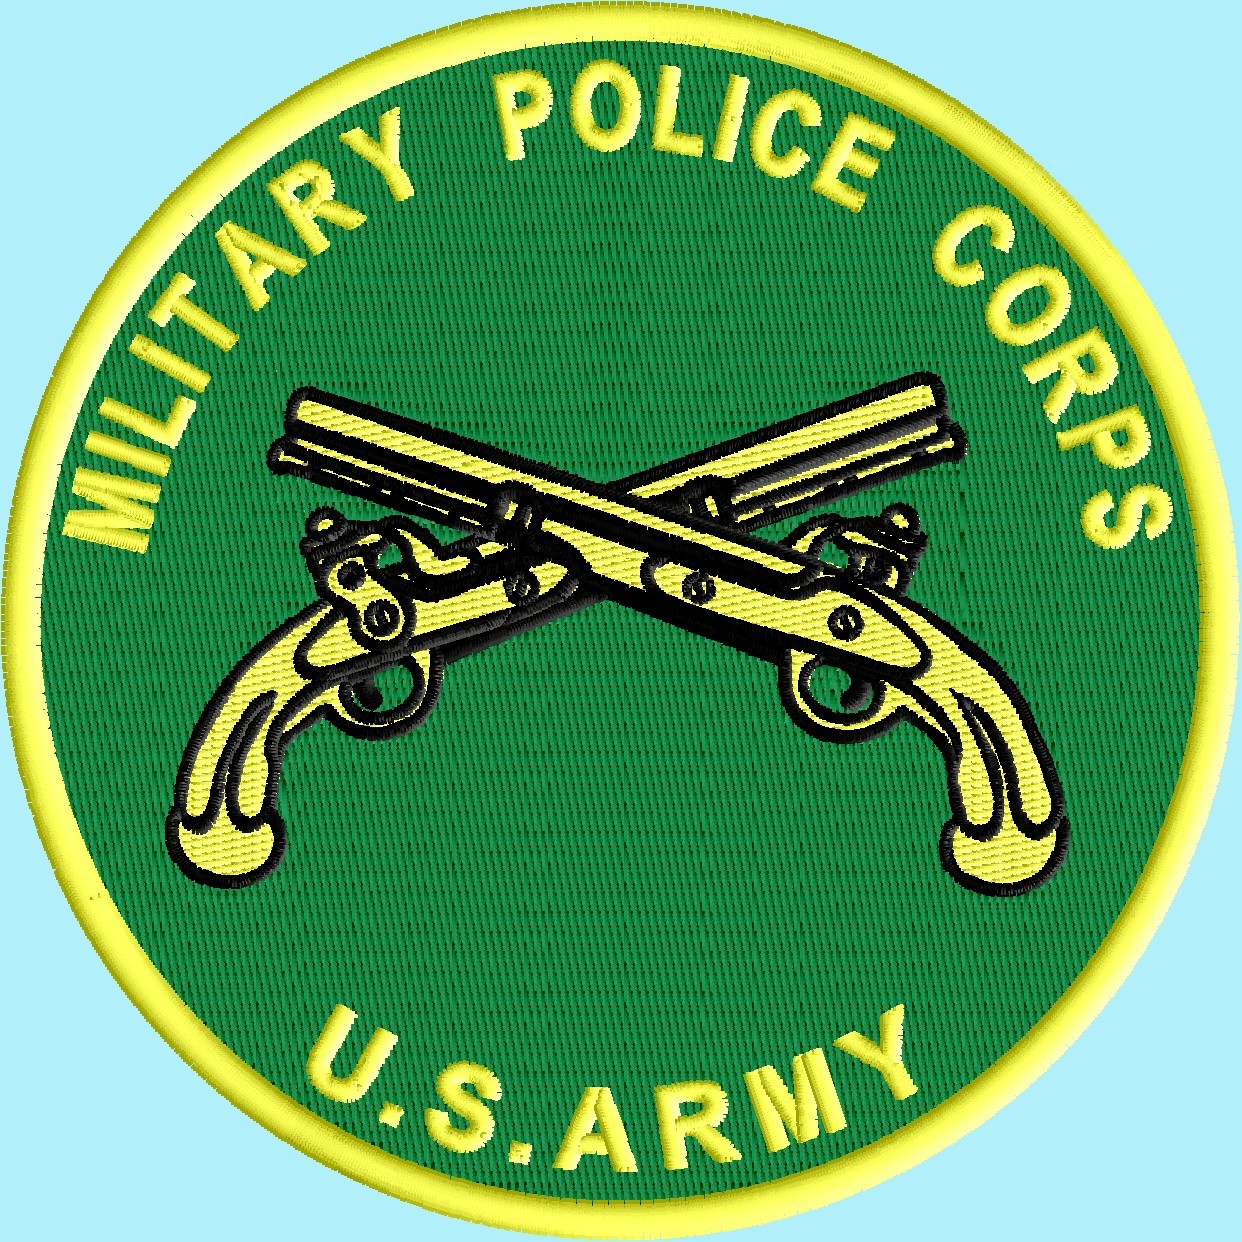 Military Police Army Logos